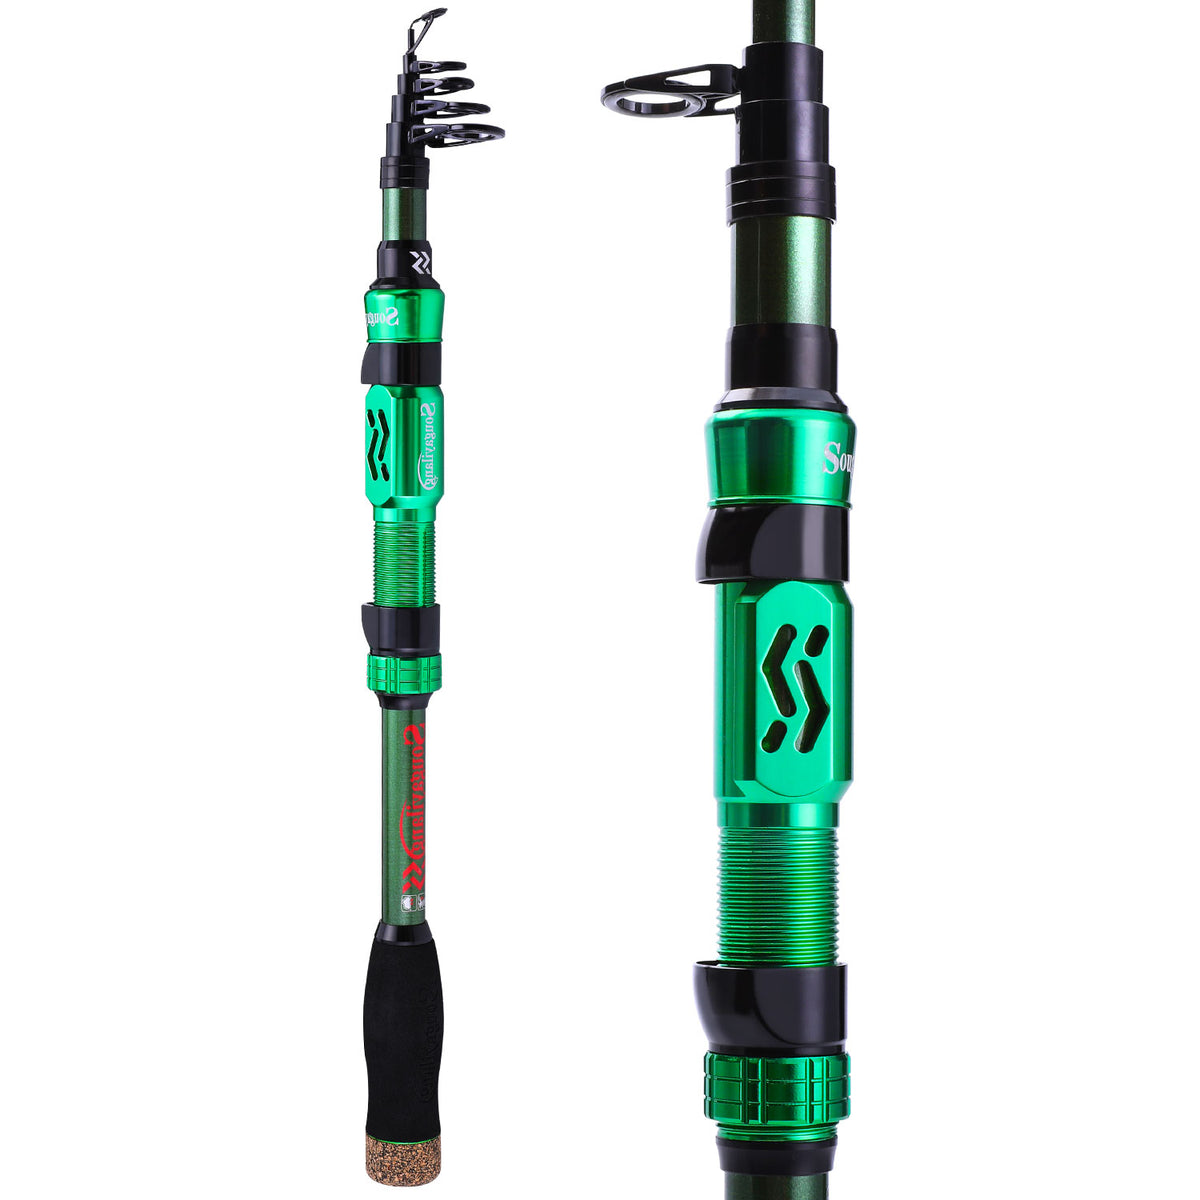 Sougayilang Telescopic Fishing Rods Portable Utralight Retractable